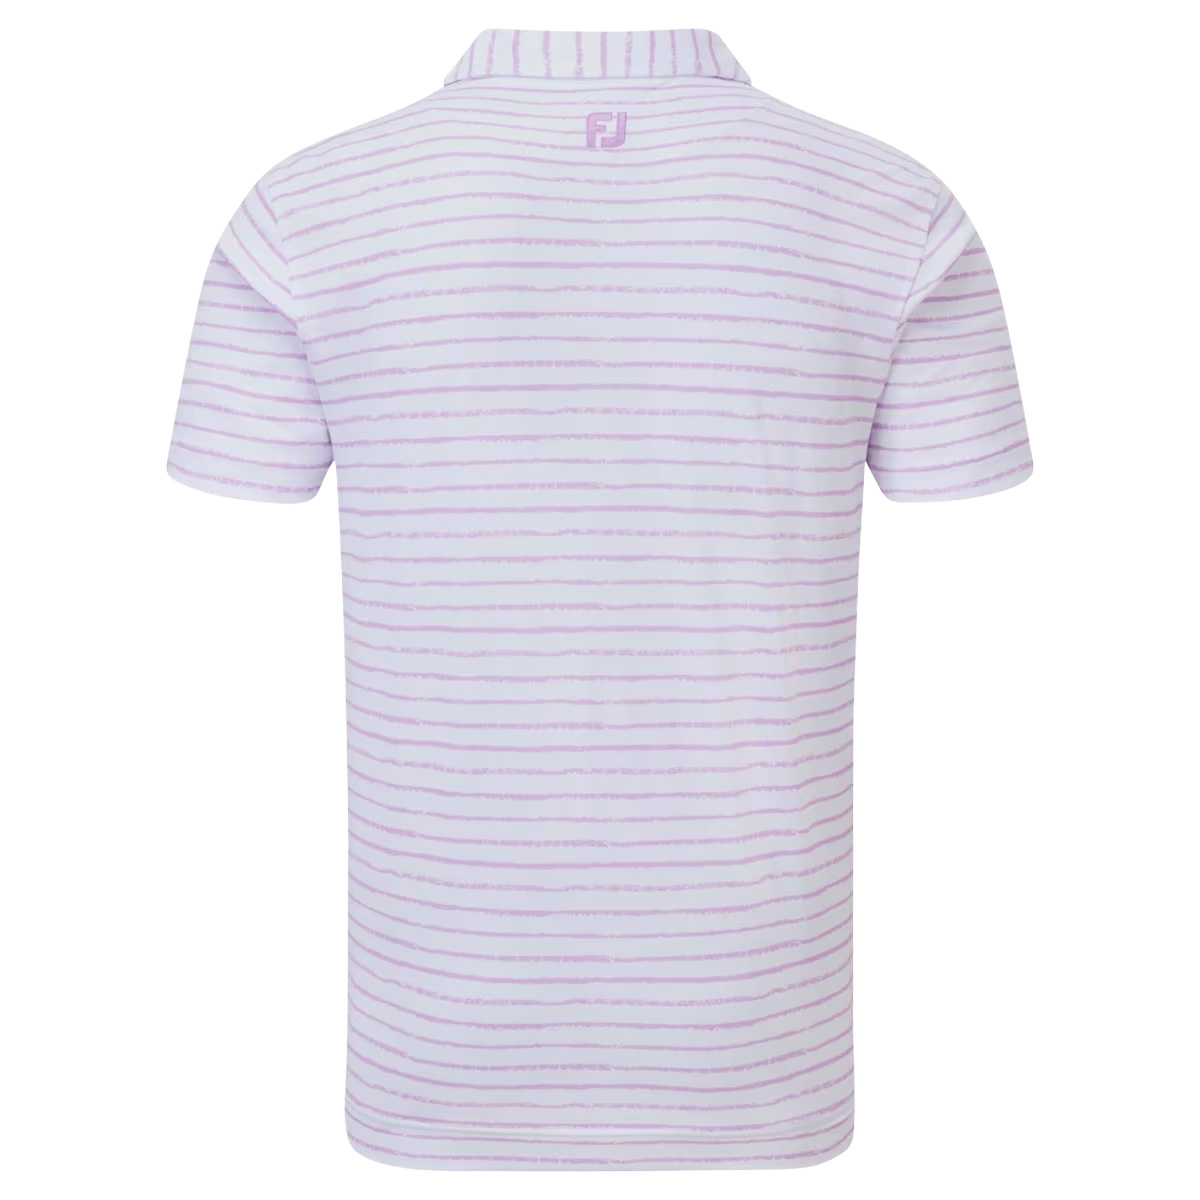 FootJoy Chalk Line Print Pique Mens Golf Polo Shirt  - White/Lavender